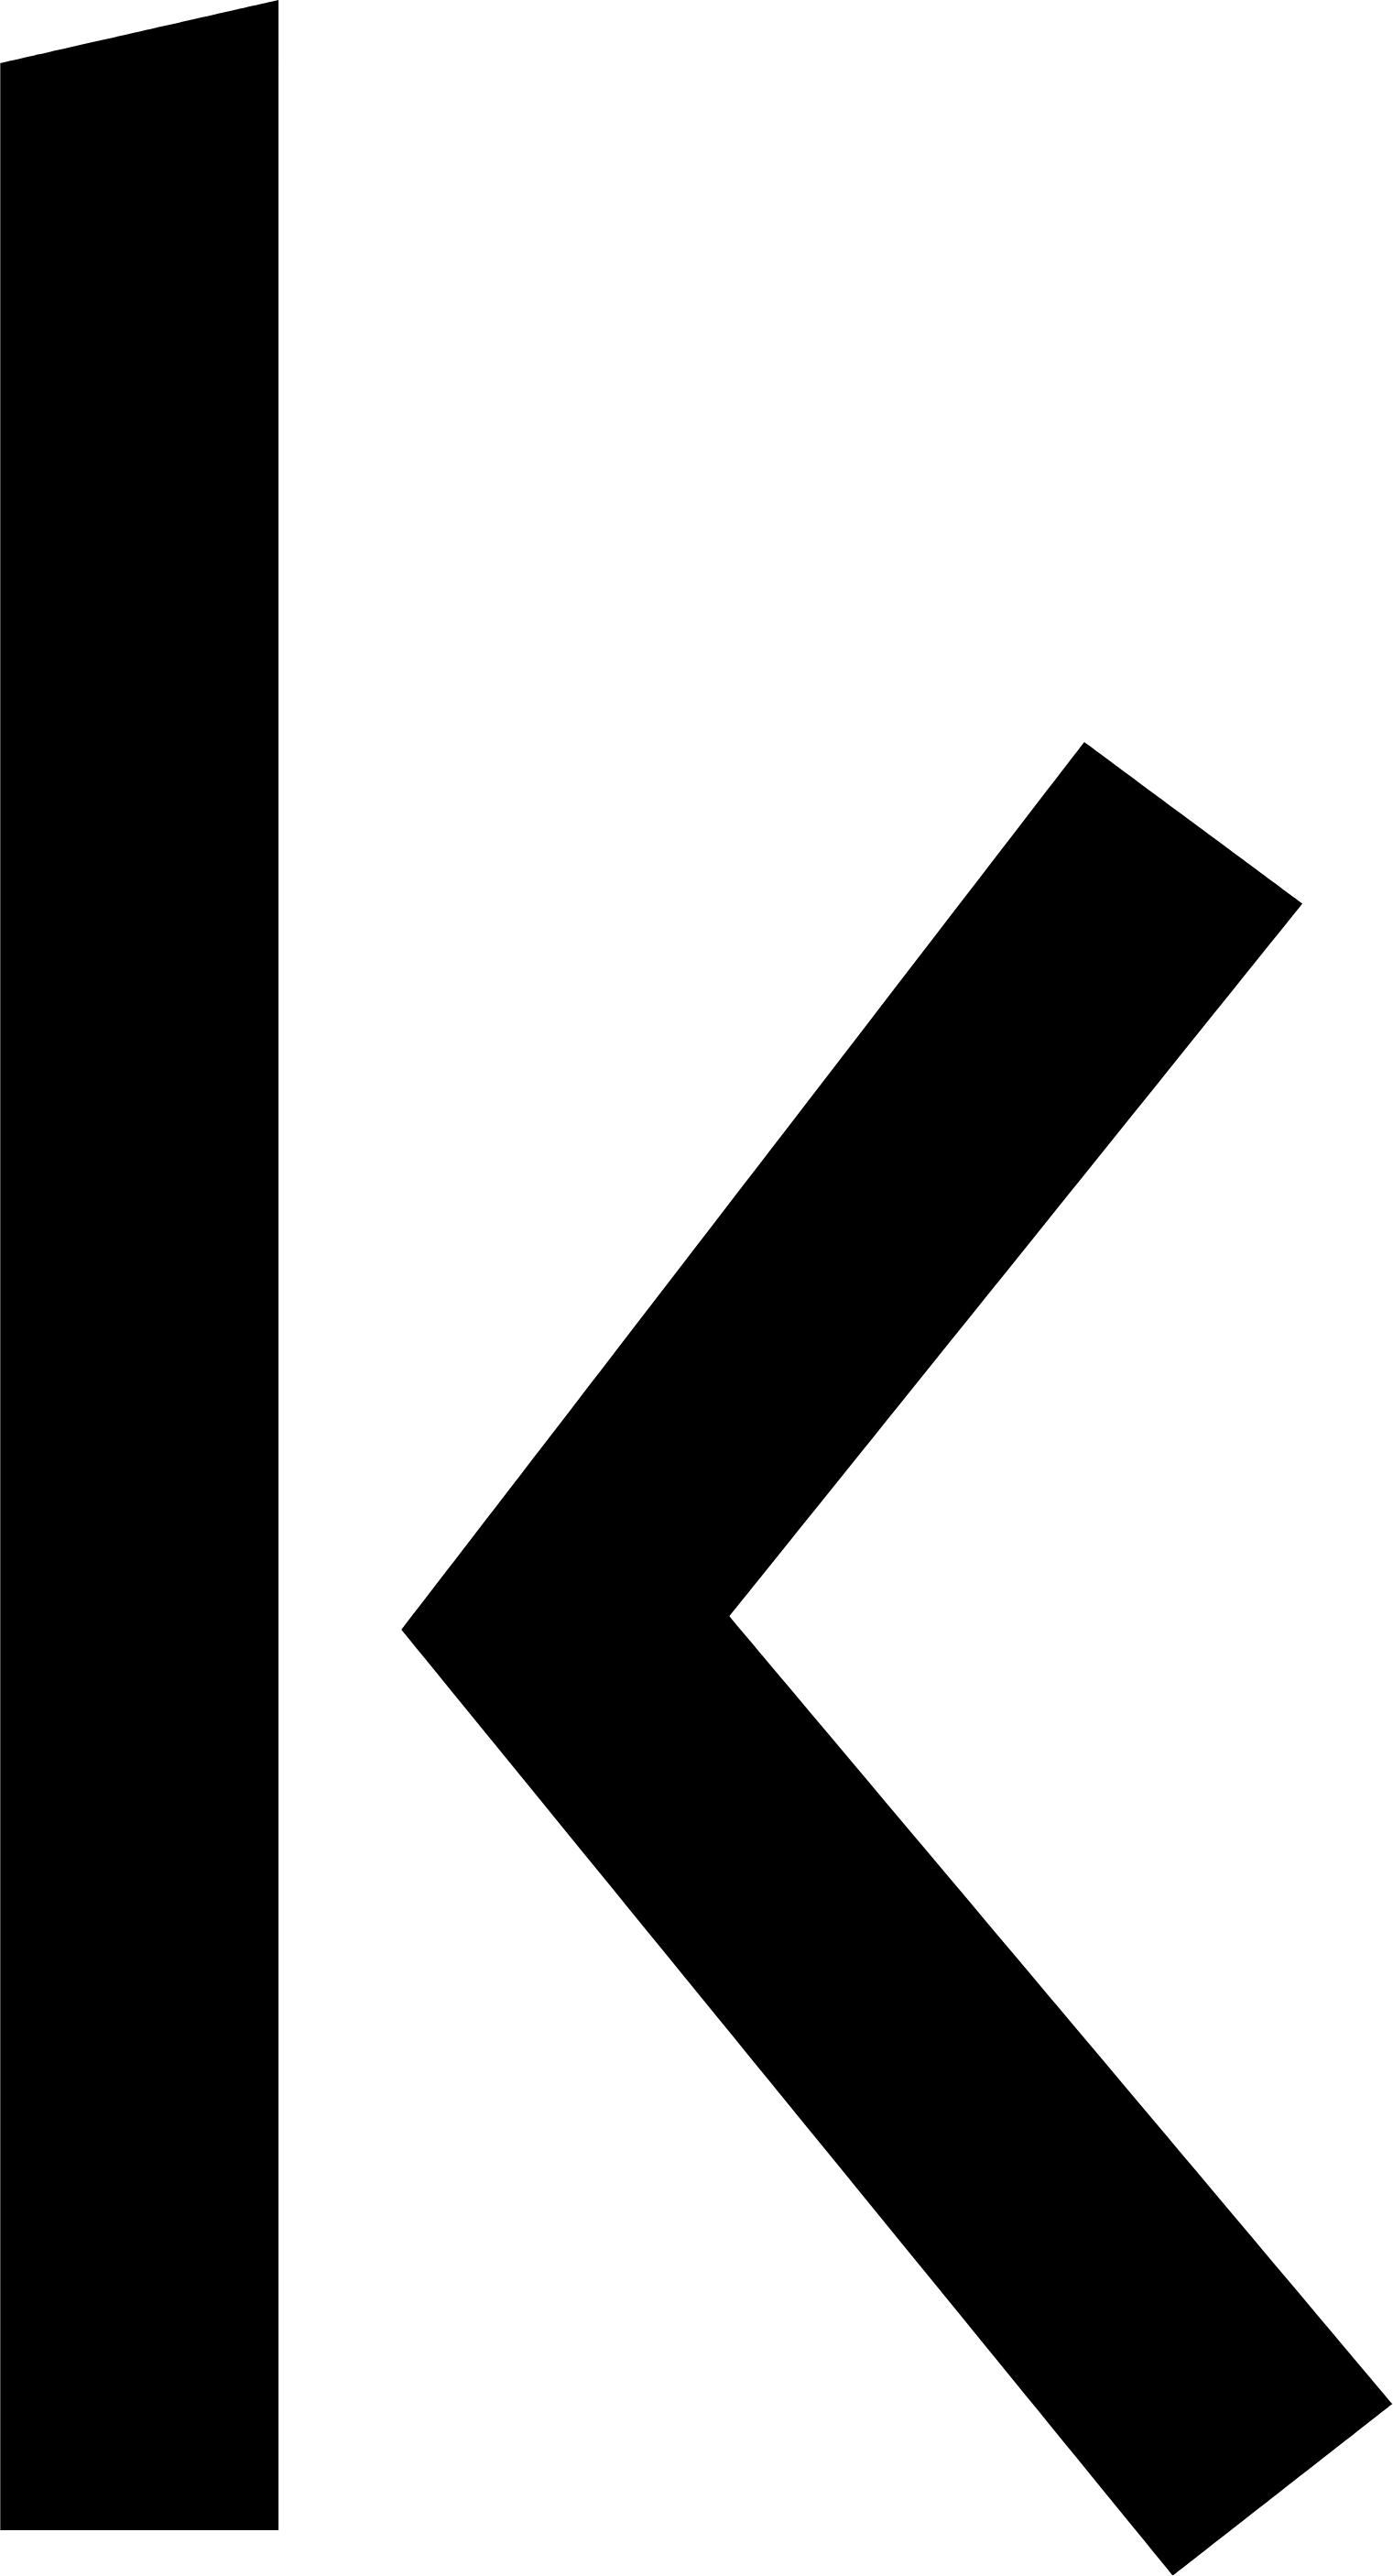 KakaoBank logo (transparent PNG)